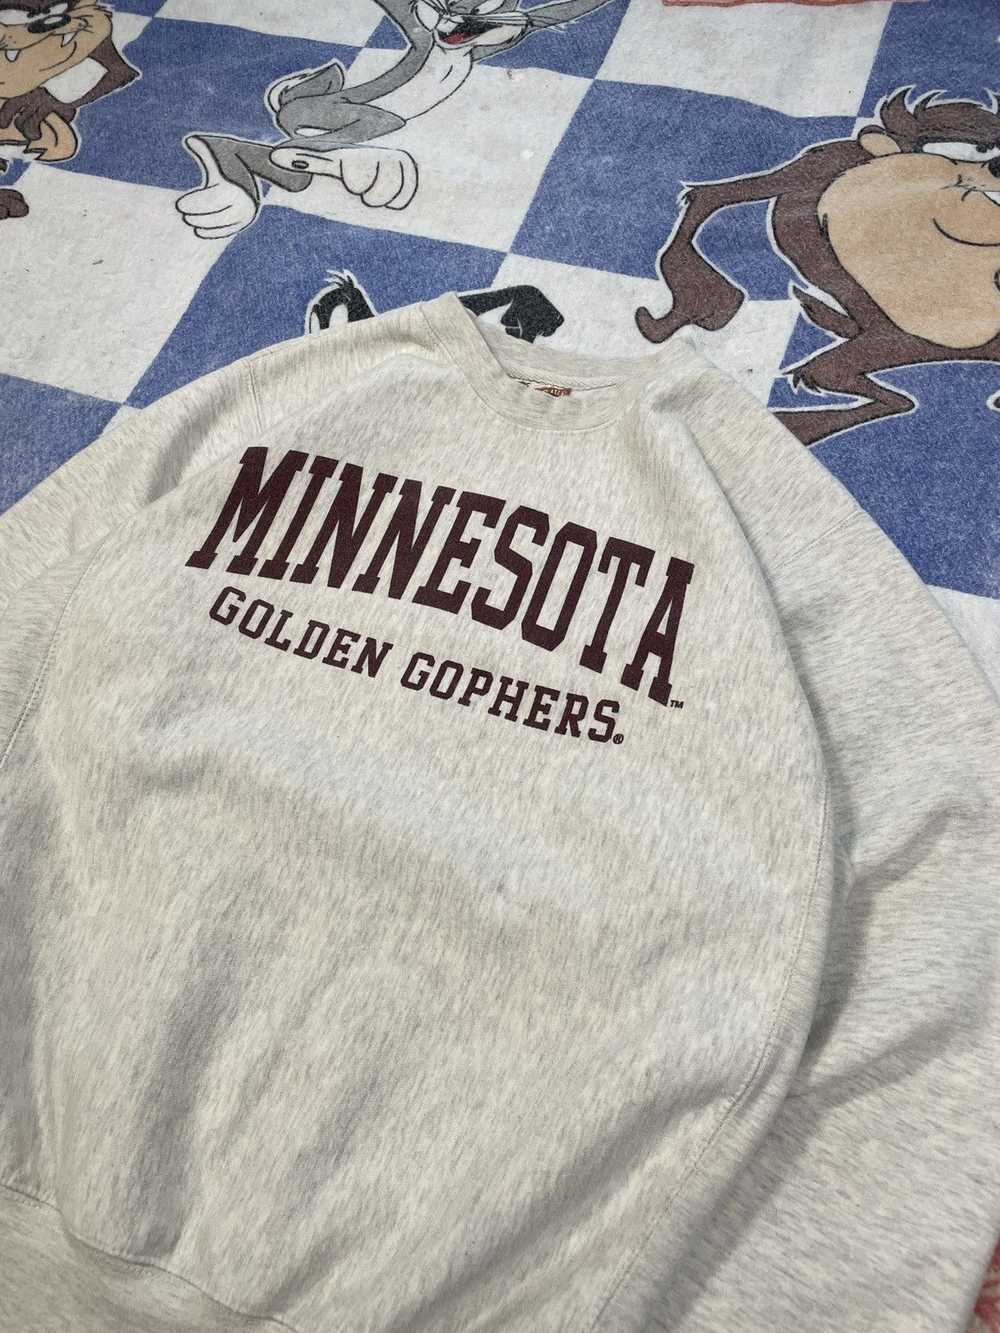 American College Minnesota gophers weave crewneck - image 2